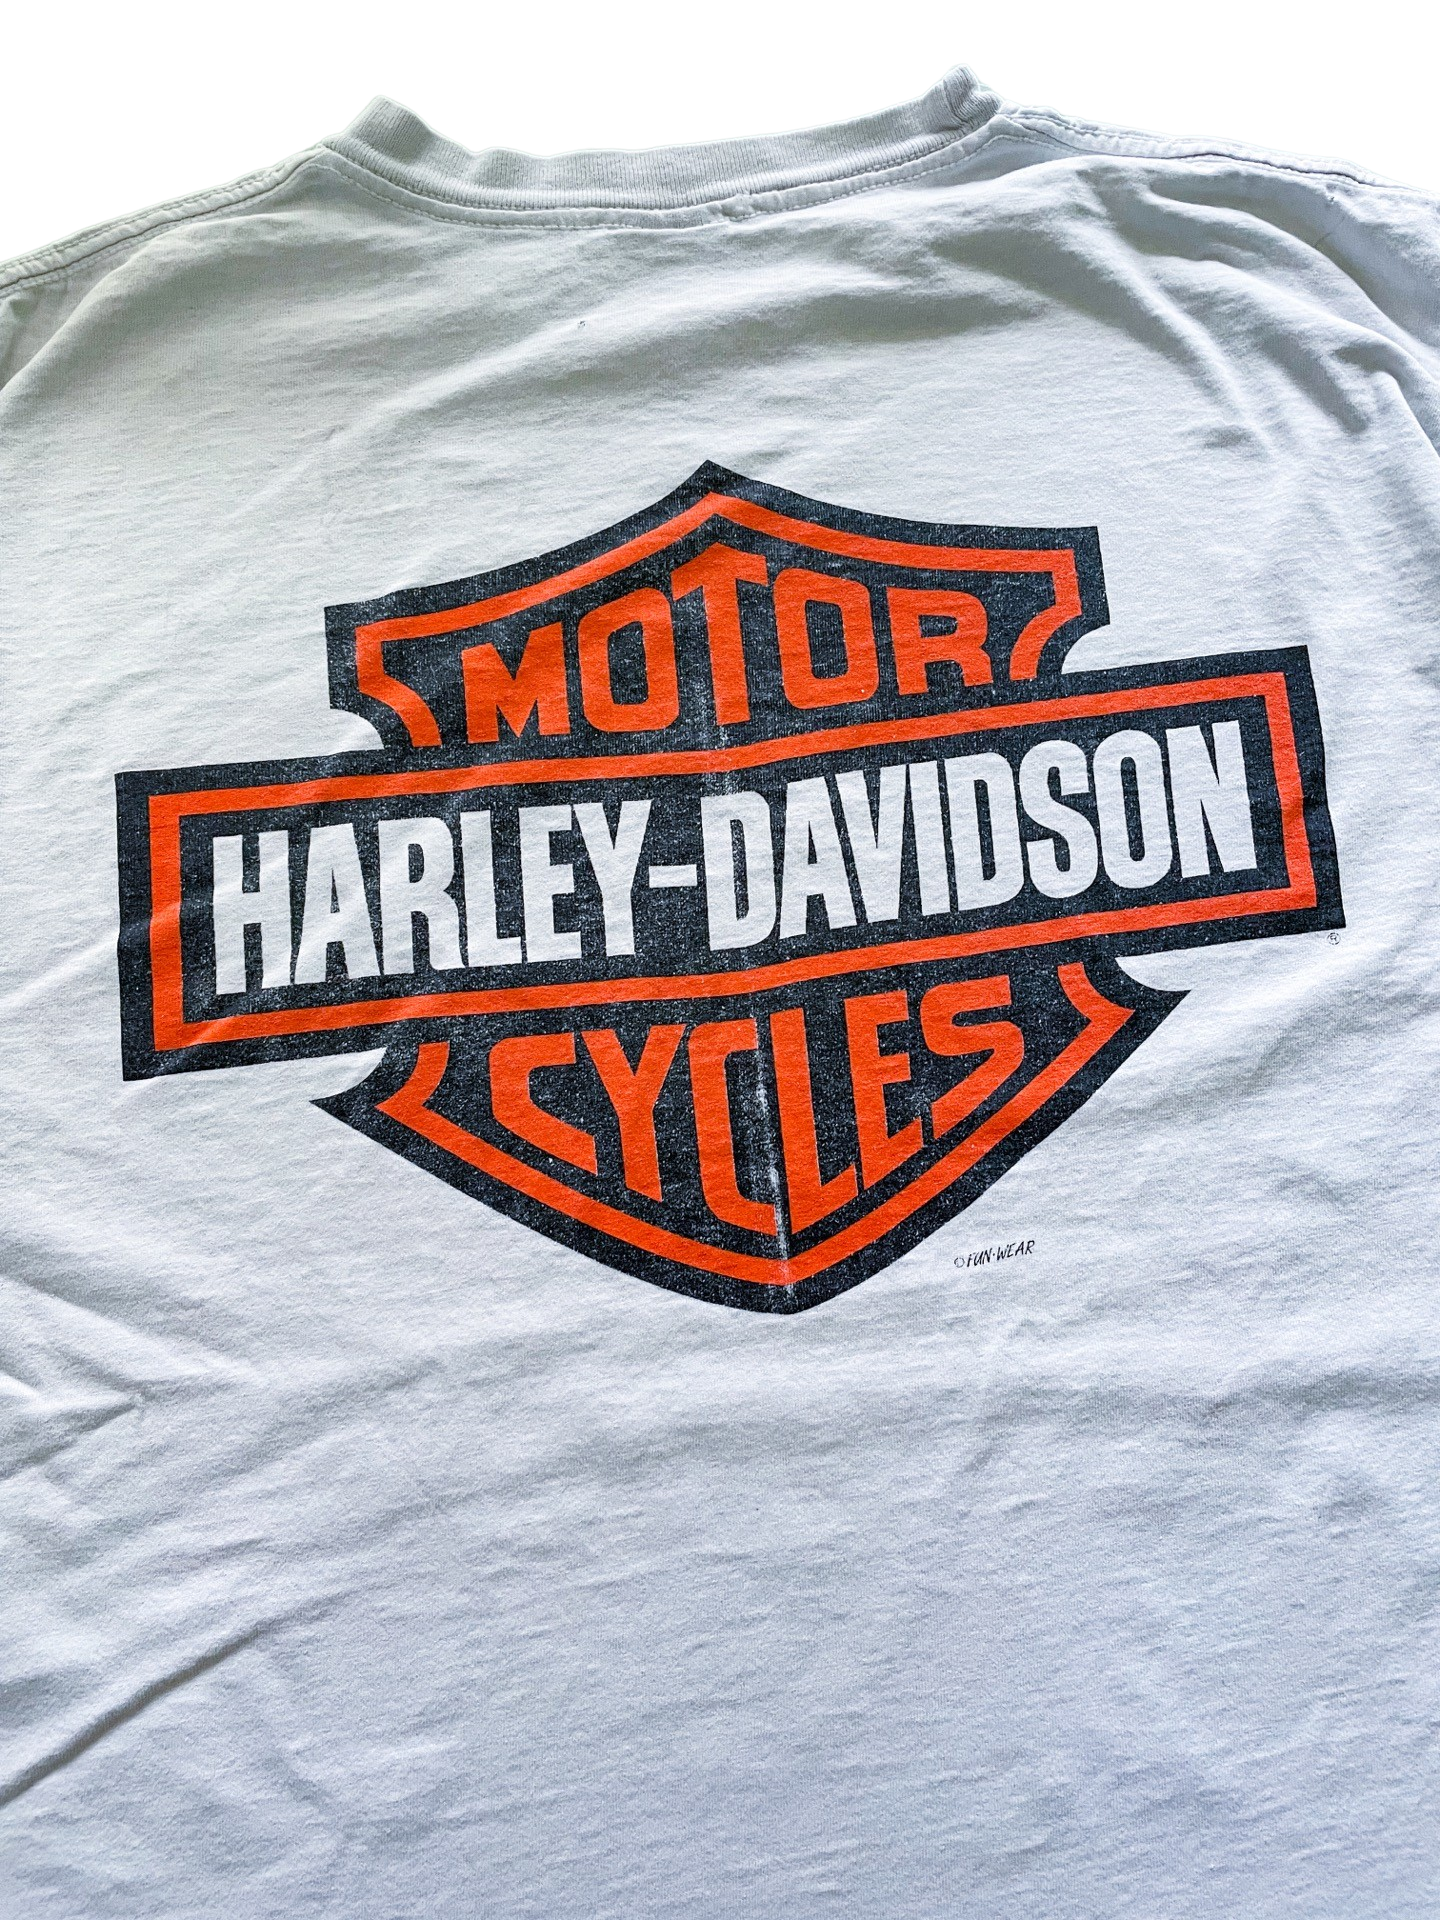 Vintage Harley Davidson t-shirt